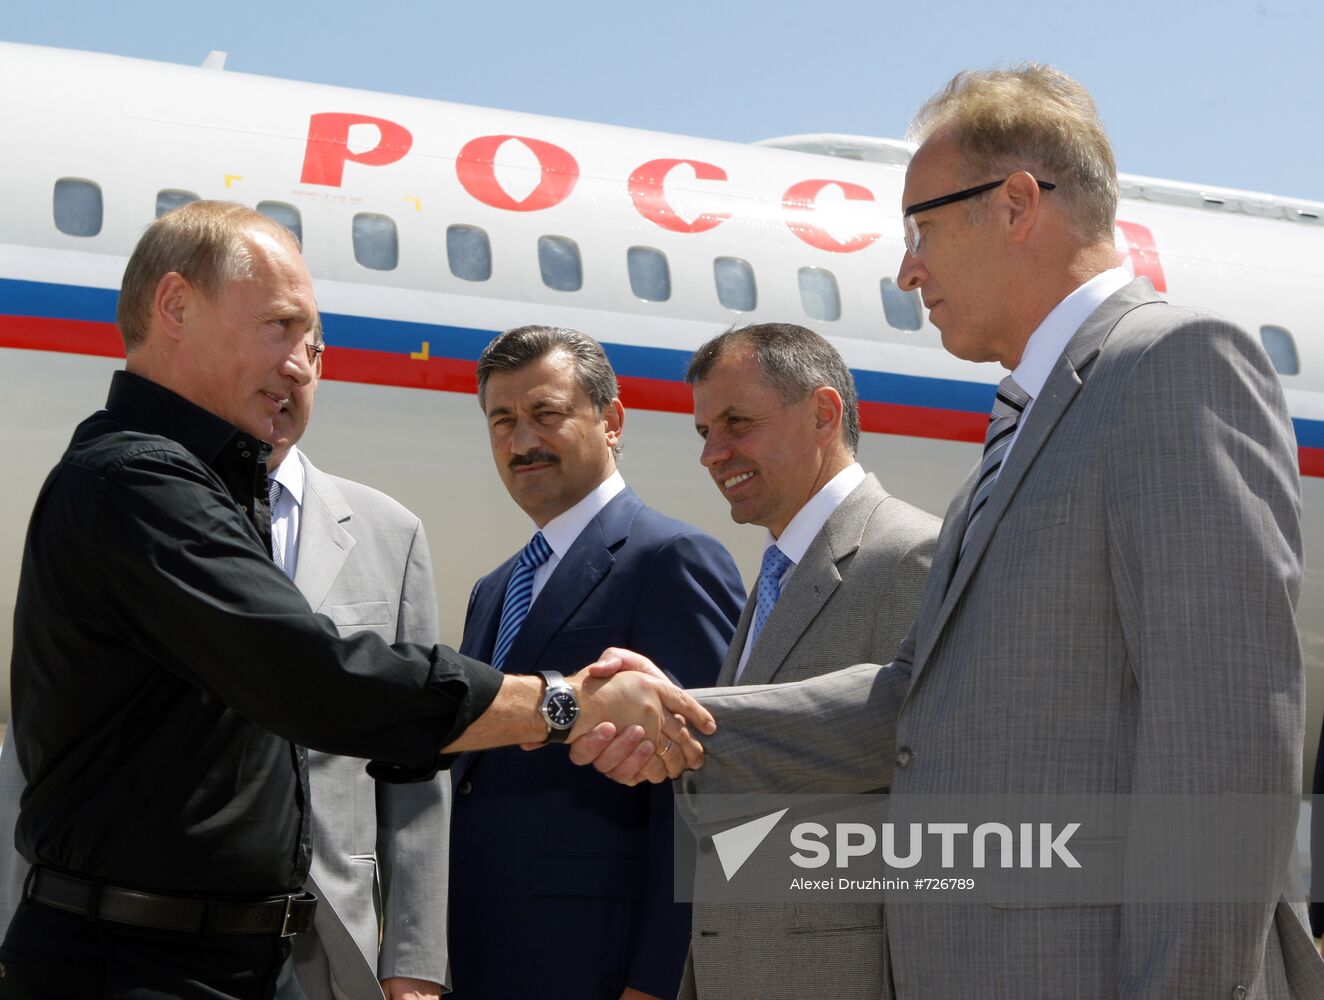 Russian Prime Minister Vladimir Putin visiting Crimea